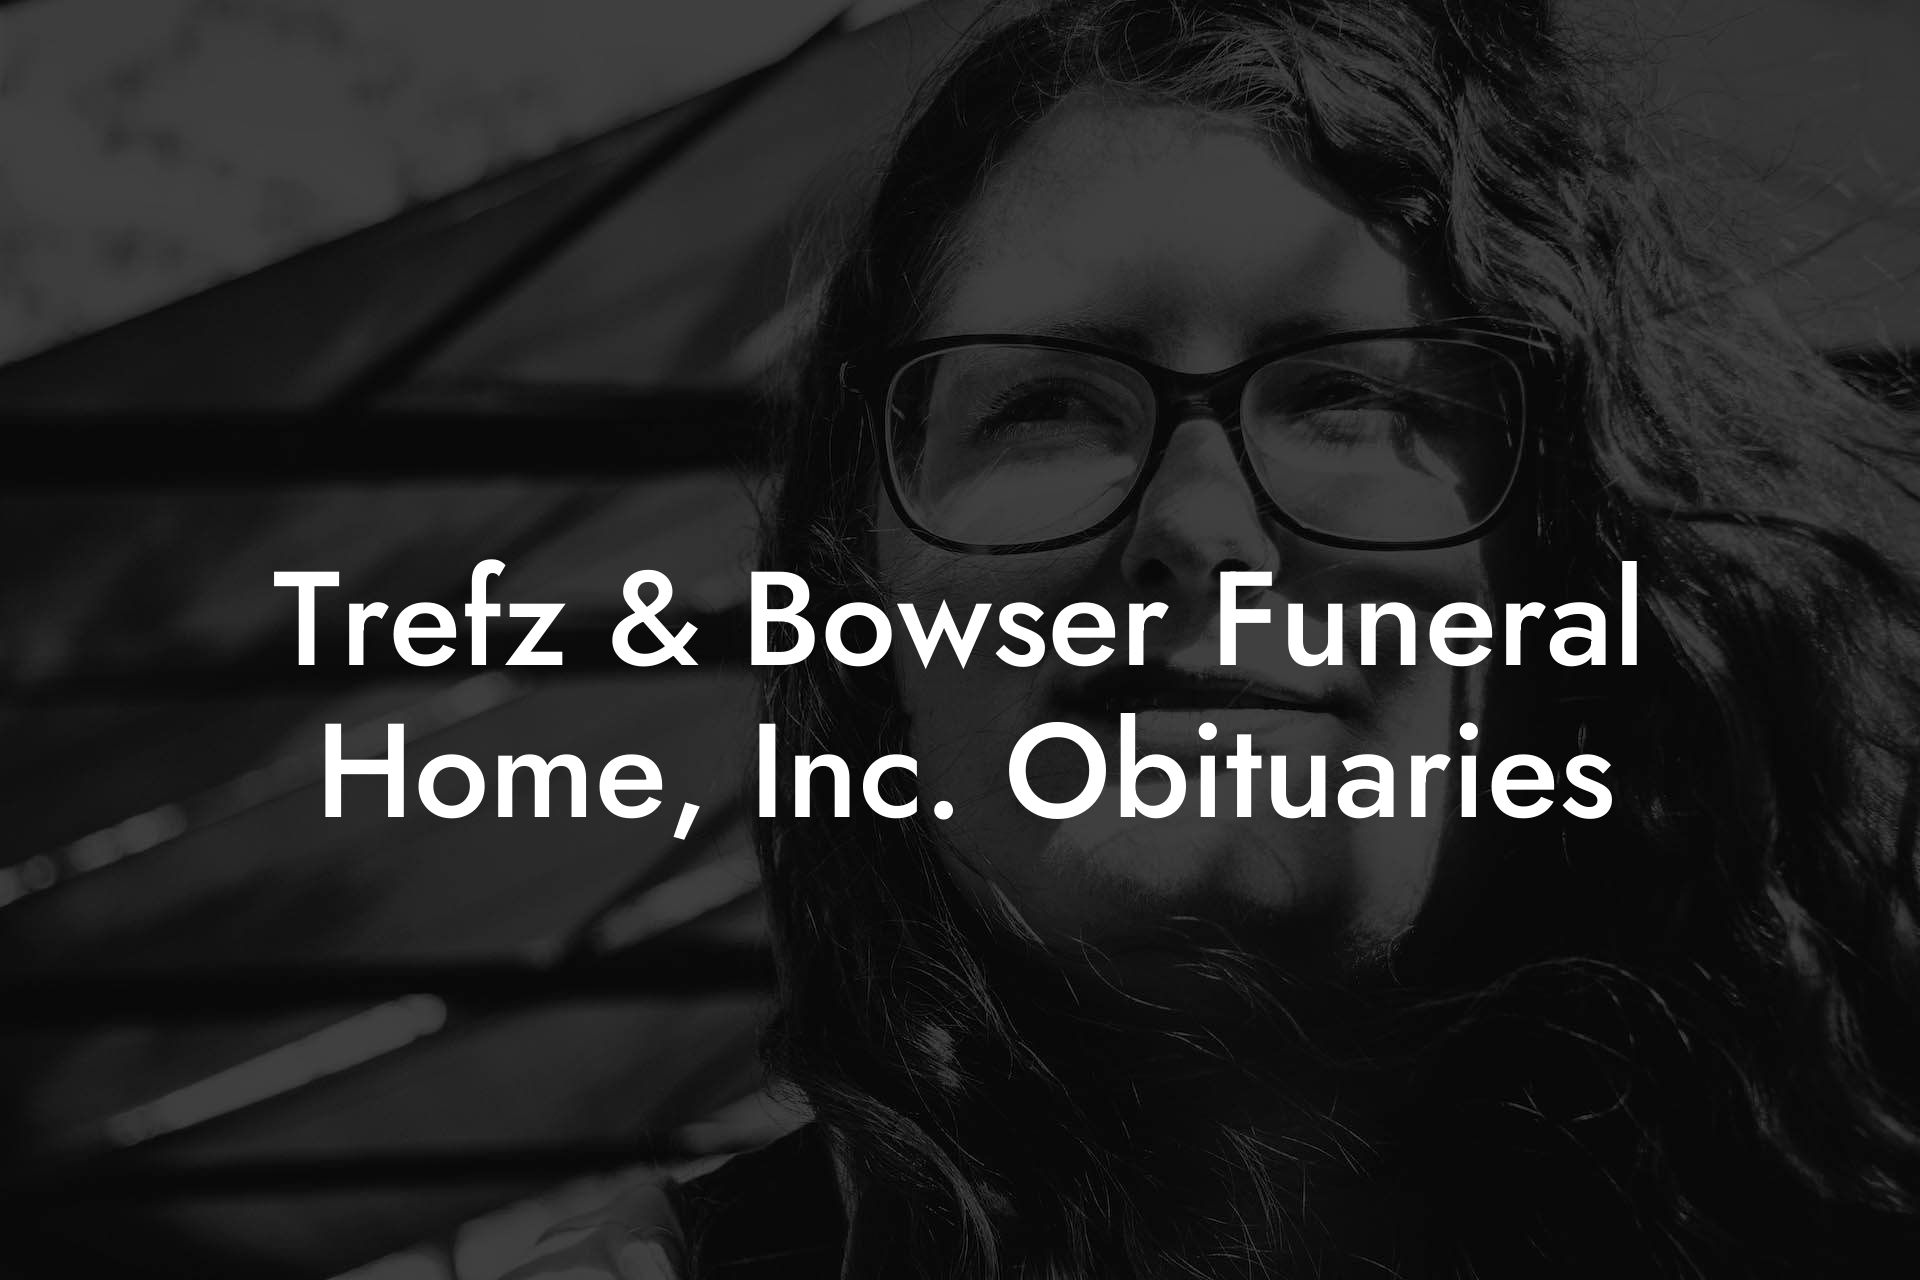 Trefz & Bowser Funeral Home, Inc. Obituaries